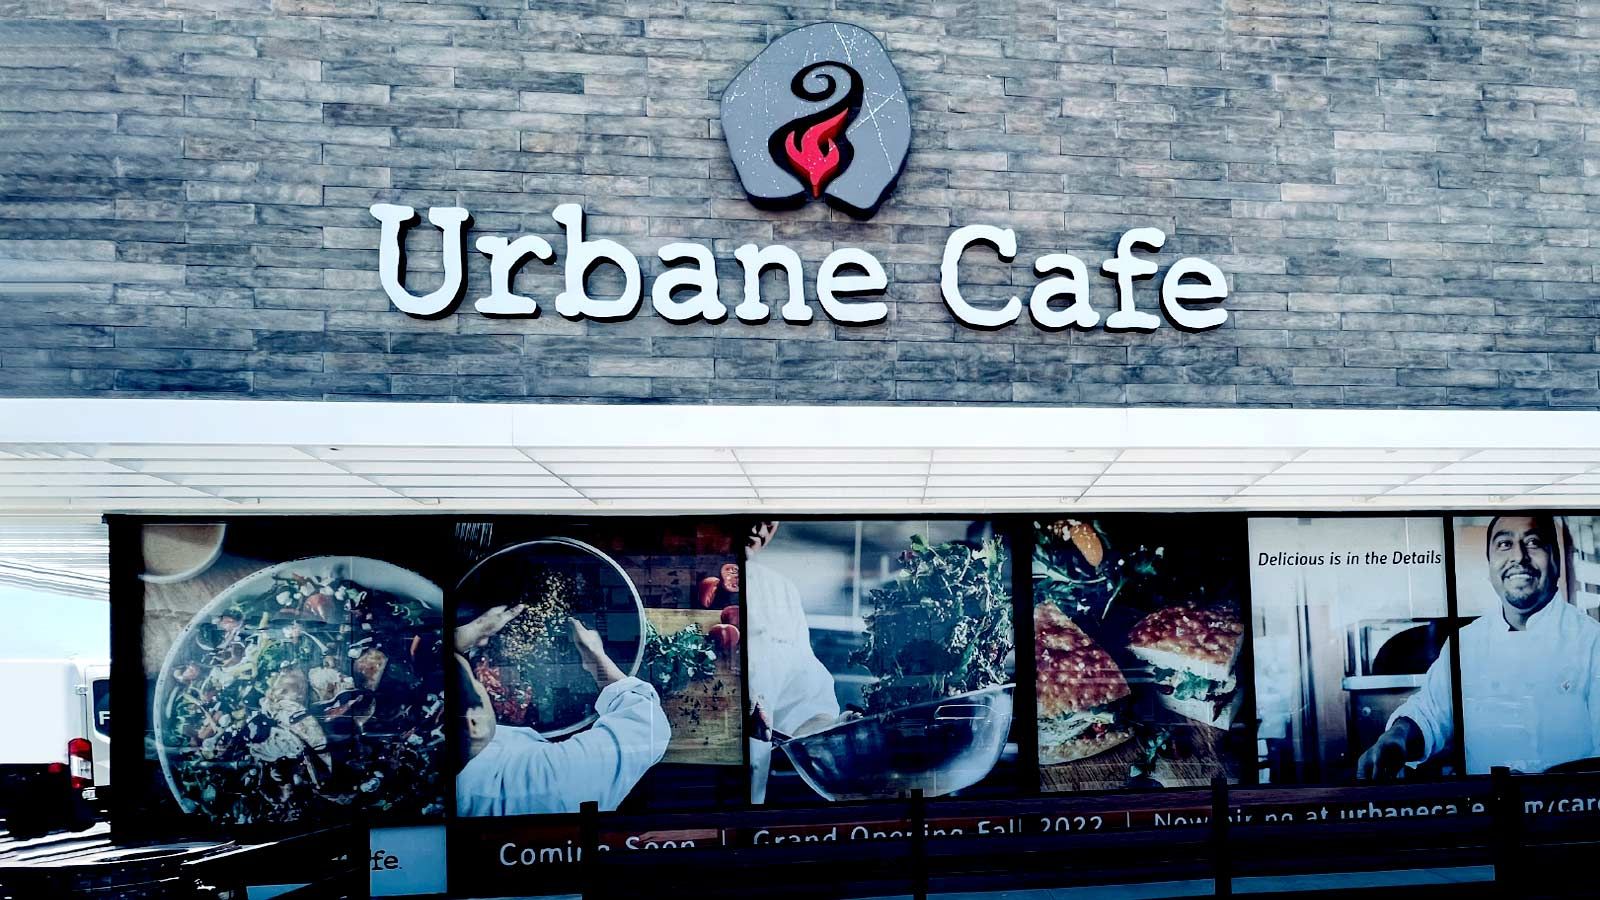 Urbane Cafe custom restaurant signs